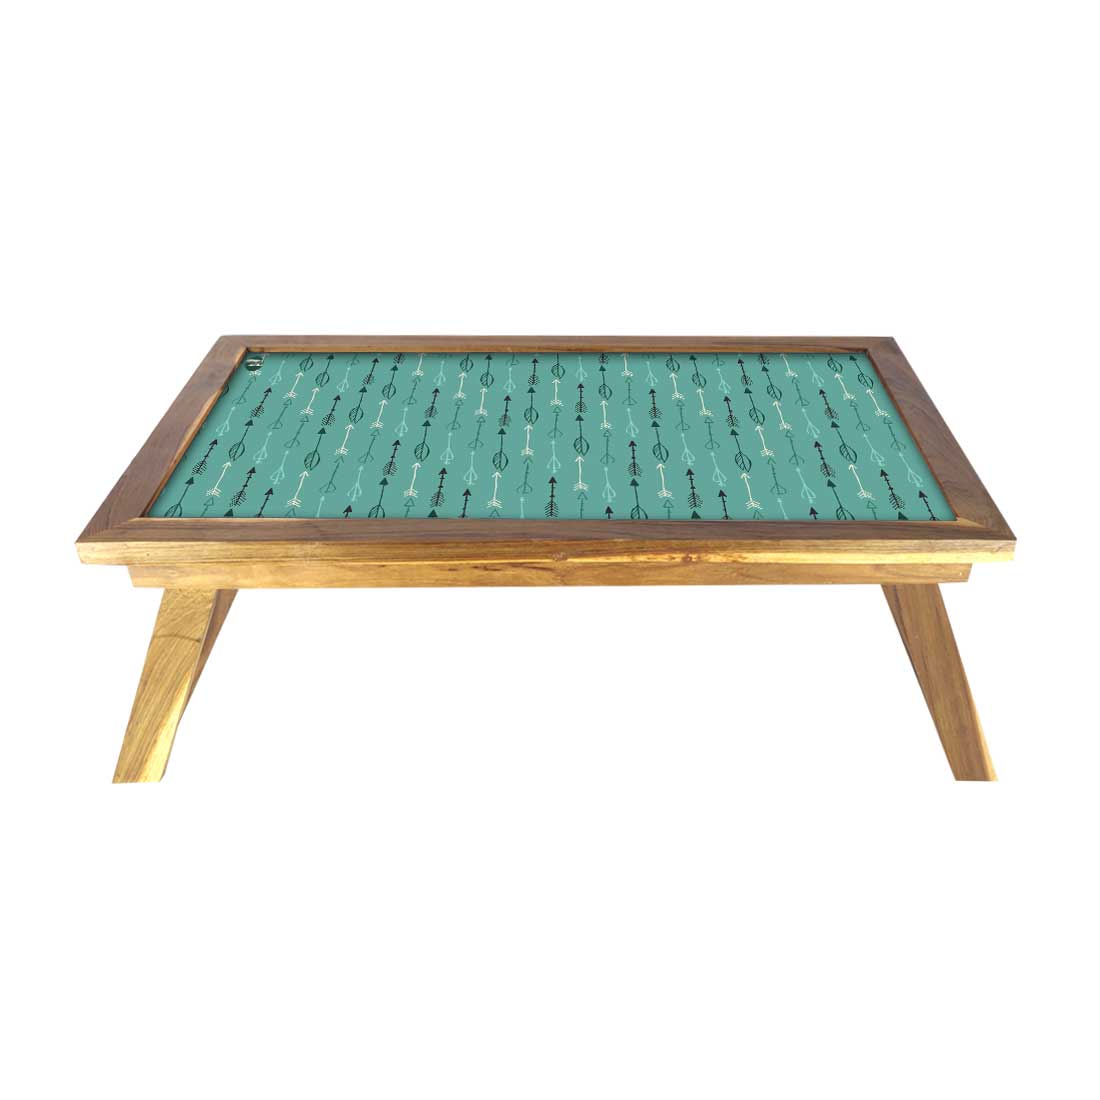 Nutcase Folding Laptop Table For Home Bed Lapdesk Breakfast Table Foldable Teak Wooden Study Desk - Arrow Style Nutcase